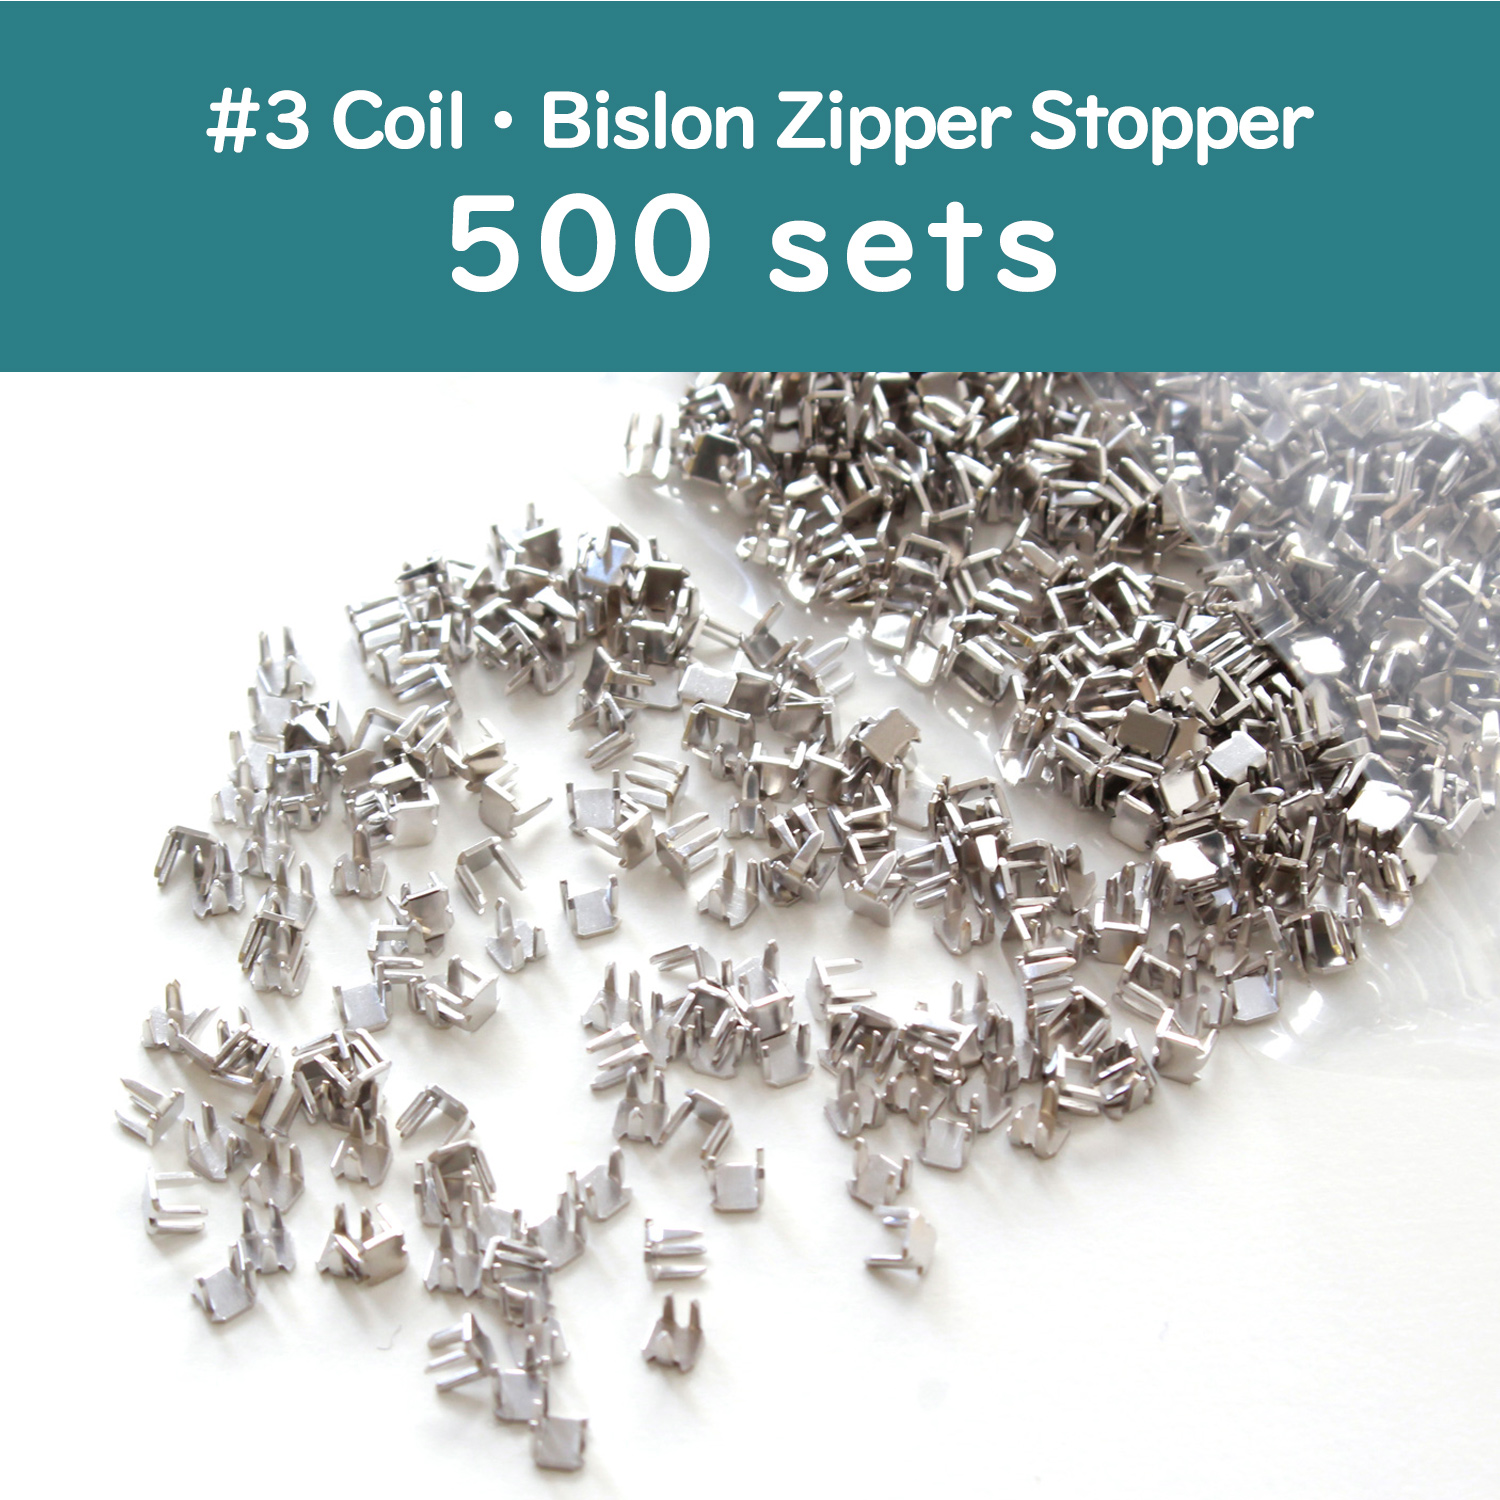 [Value Pack] F2-216-500 #3 Coil・Bislon Zipper Stopper 500 sets, 1000pcs (bag)